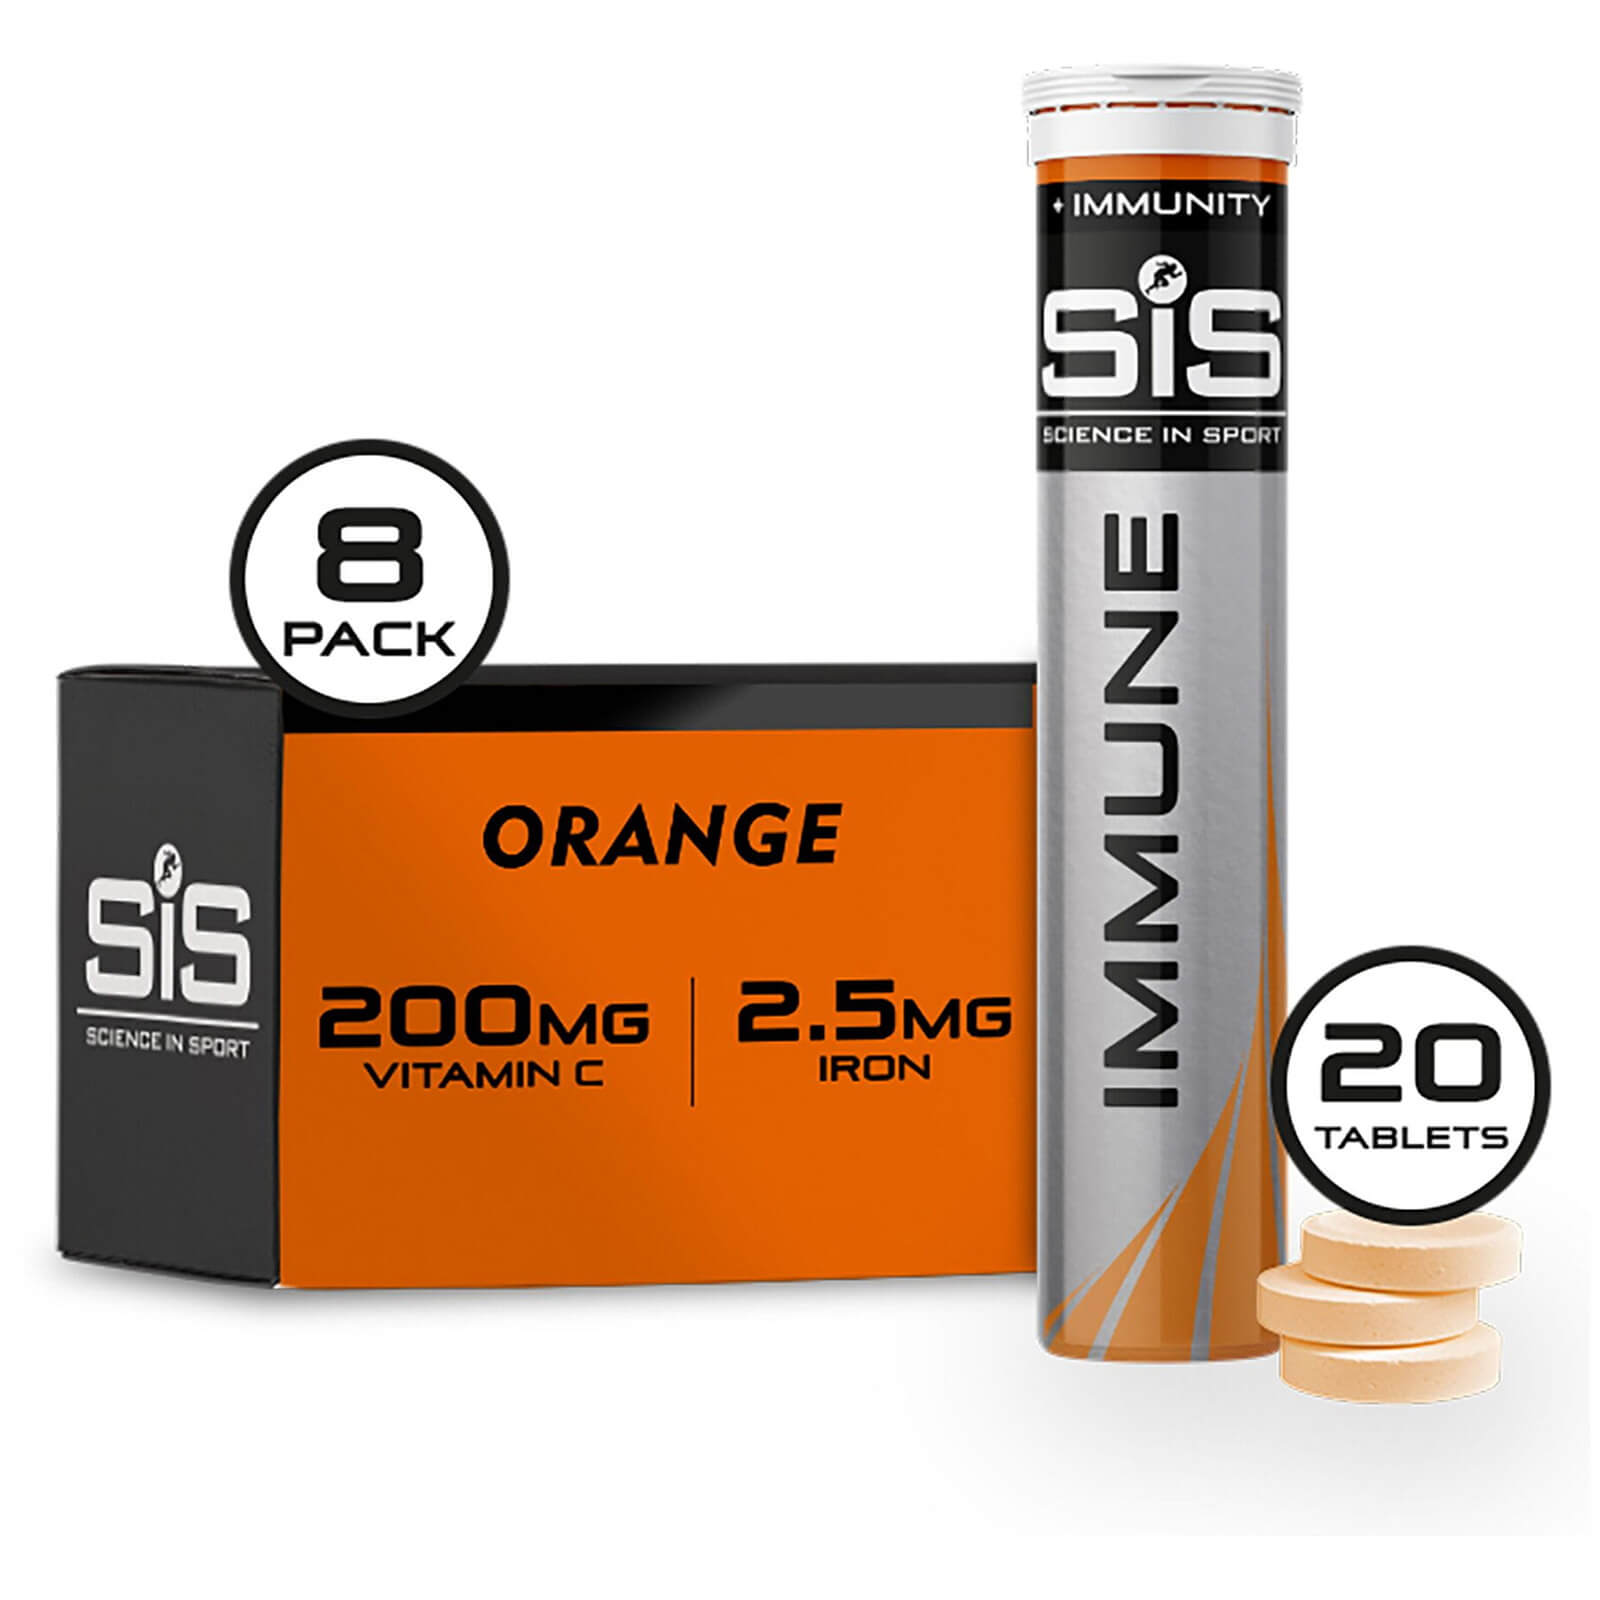 Science in Sport GO Immune Hydro Tablet 8 Tubes of 20 - Orange